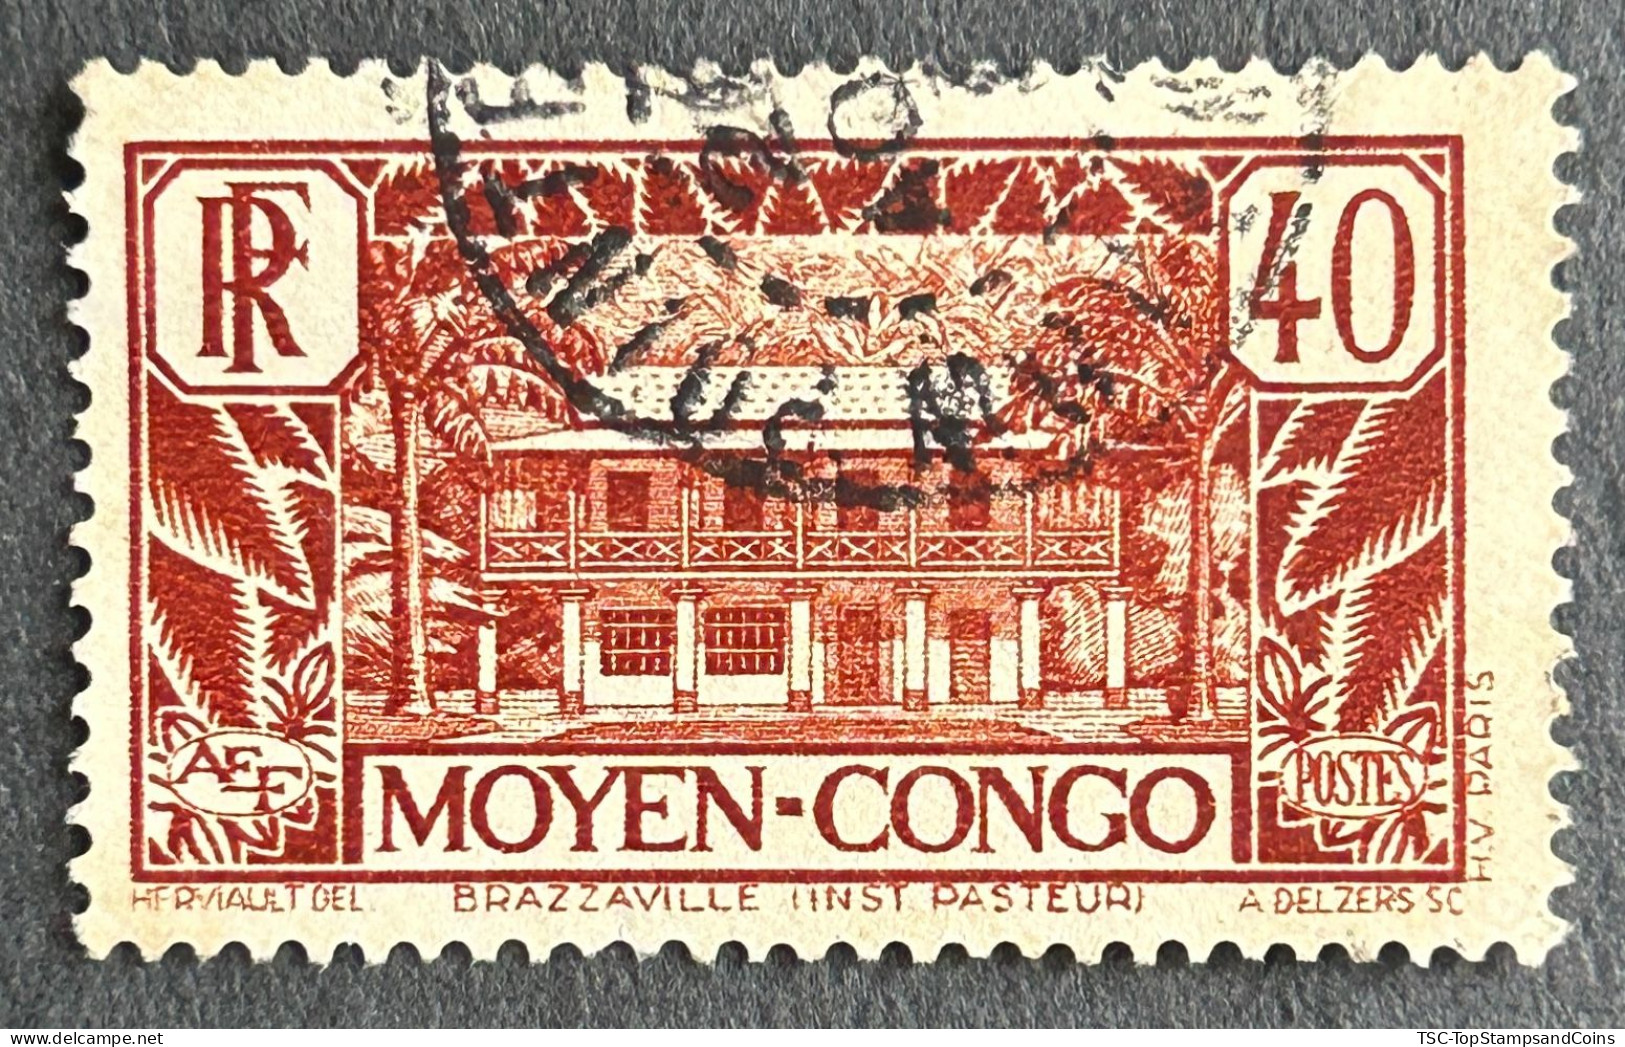 FRCG122U - Brazzaville - Pasteur Institute - 40 C Used Stamp - Middle Congo - 1933 - Gebruikt